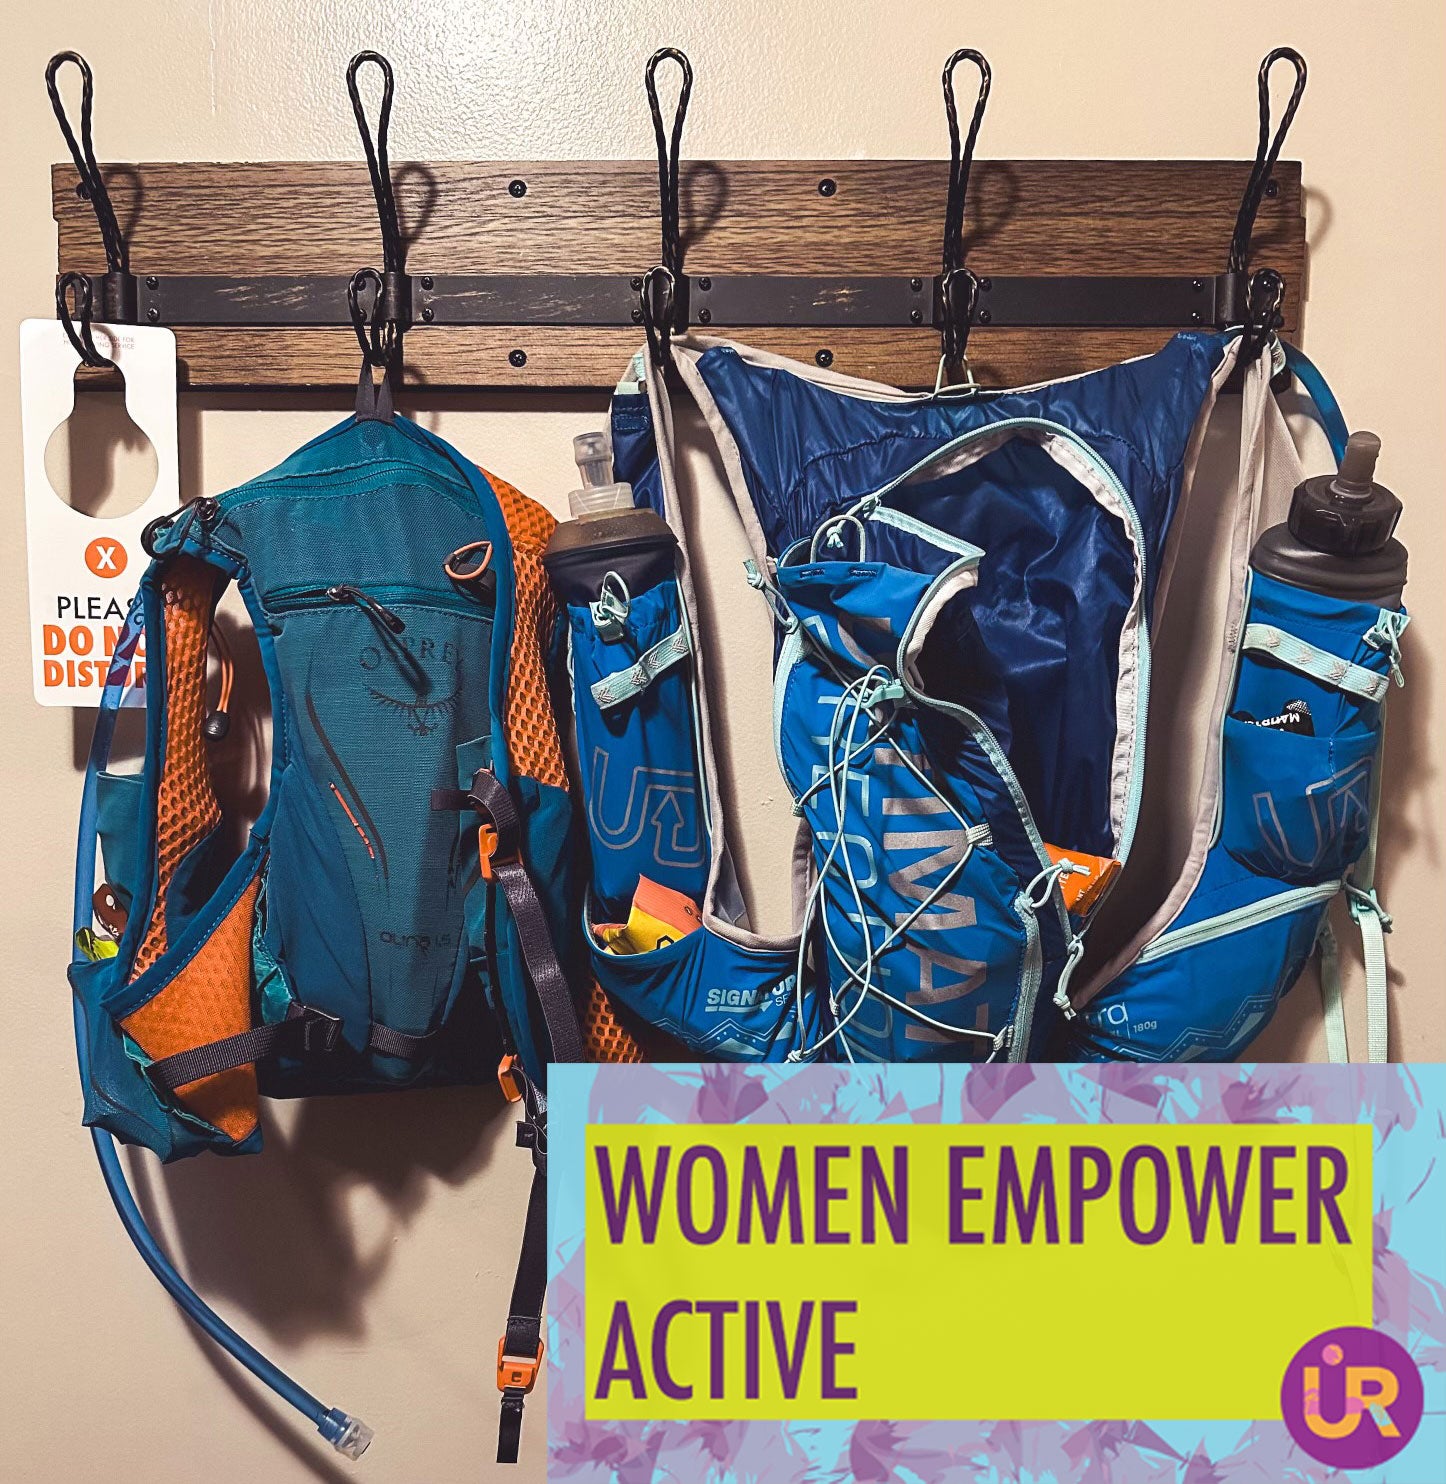 Women Empower Active Race Report with Nicole Bush